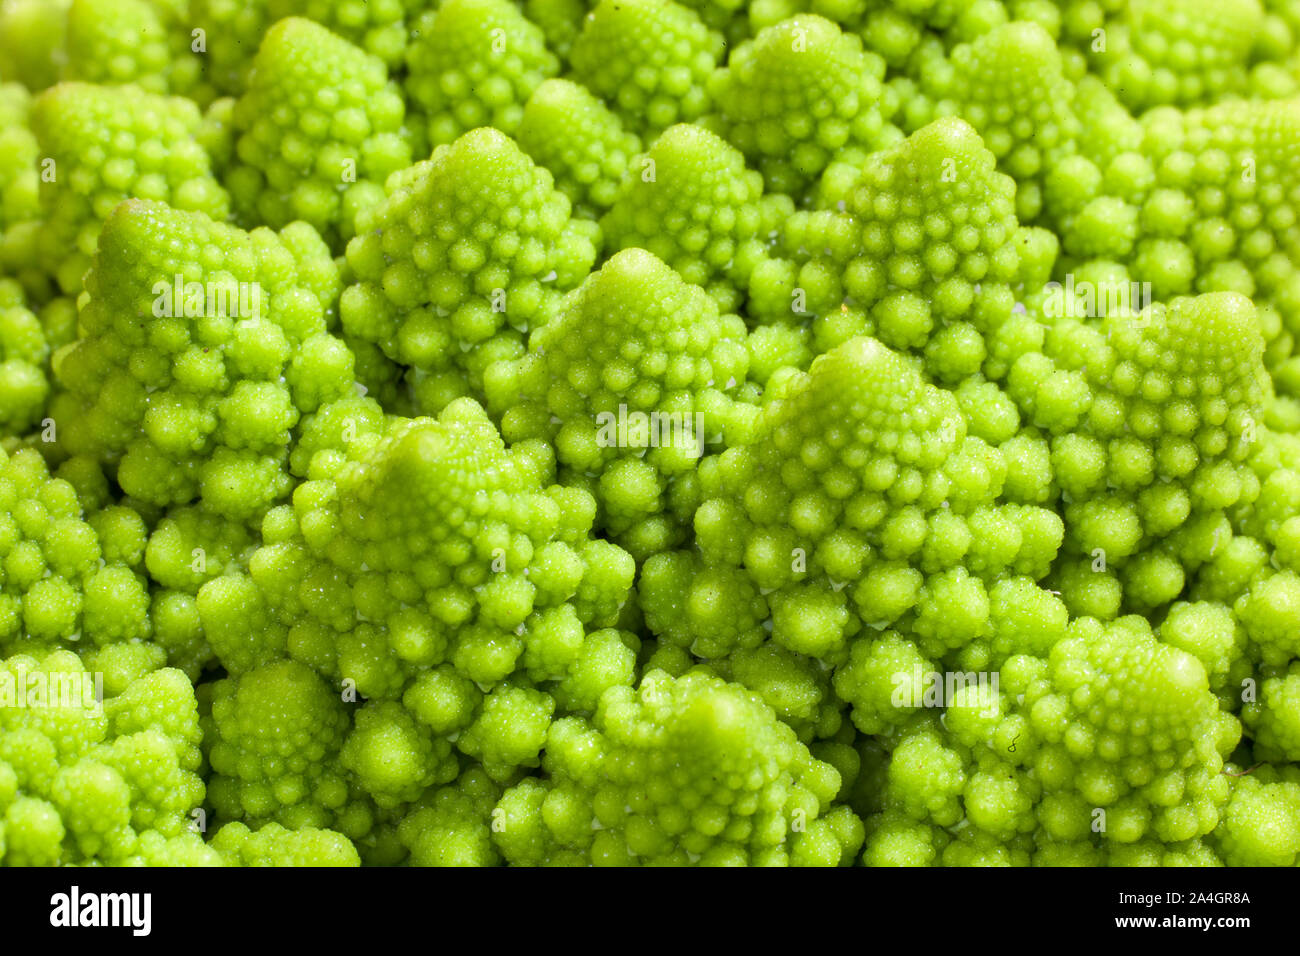 Romanesque cauliflower Stock Photo